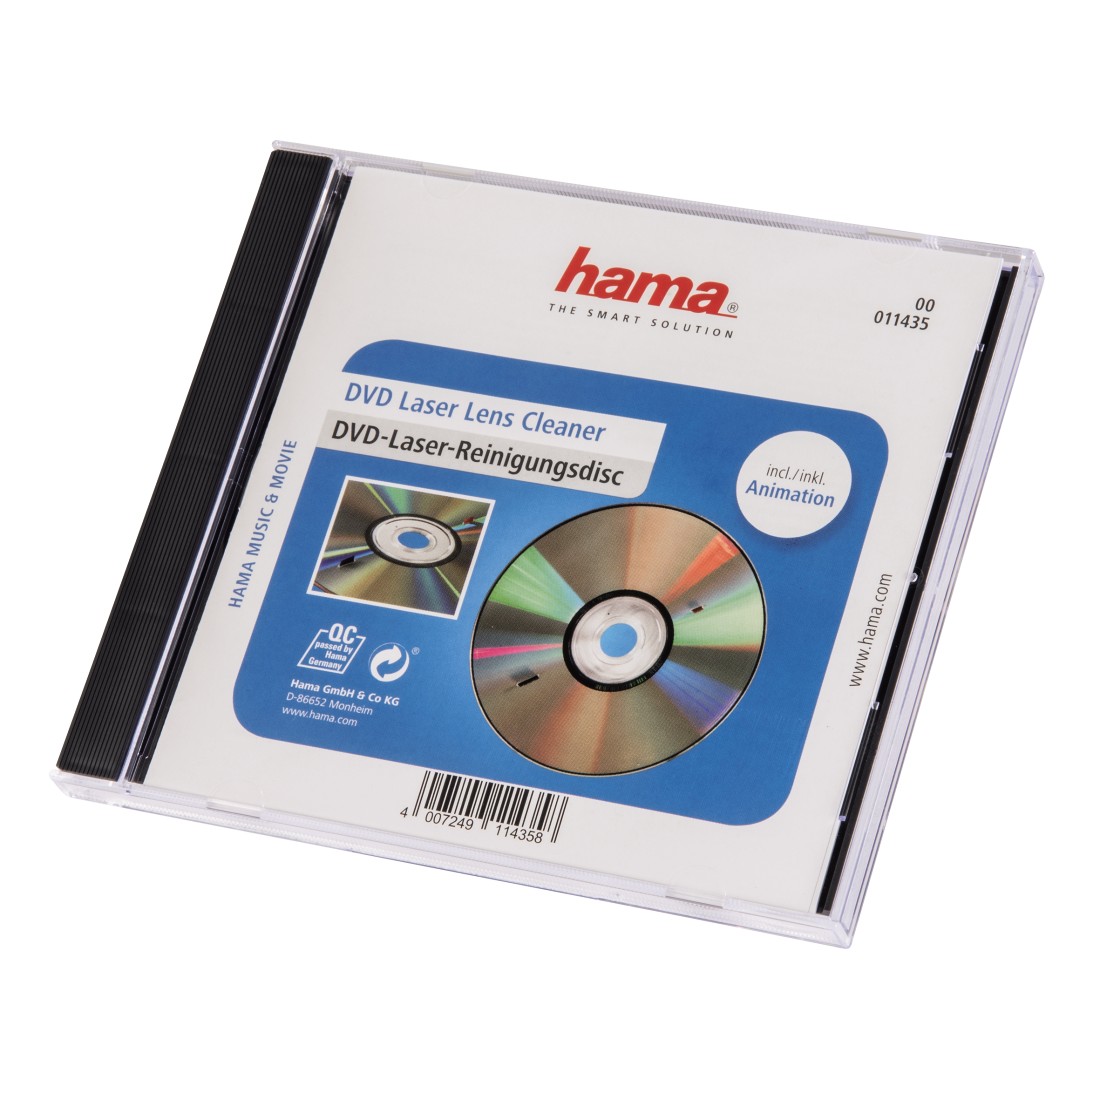 00011435 Hama DVD-Laser-Reinigungsdisk | hama.com